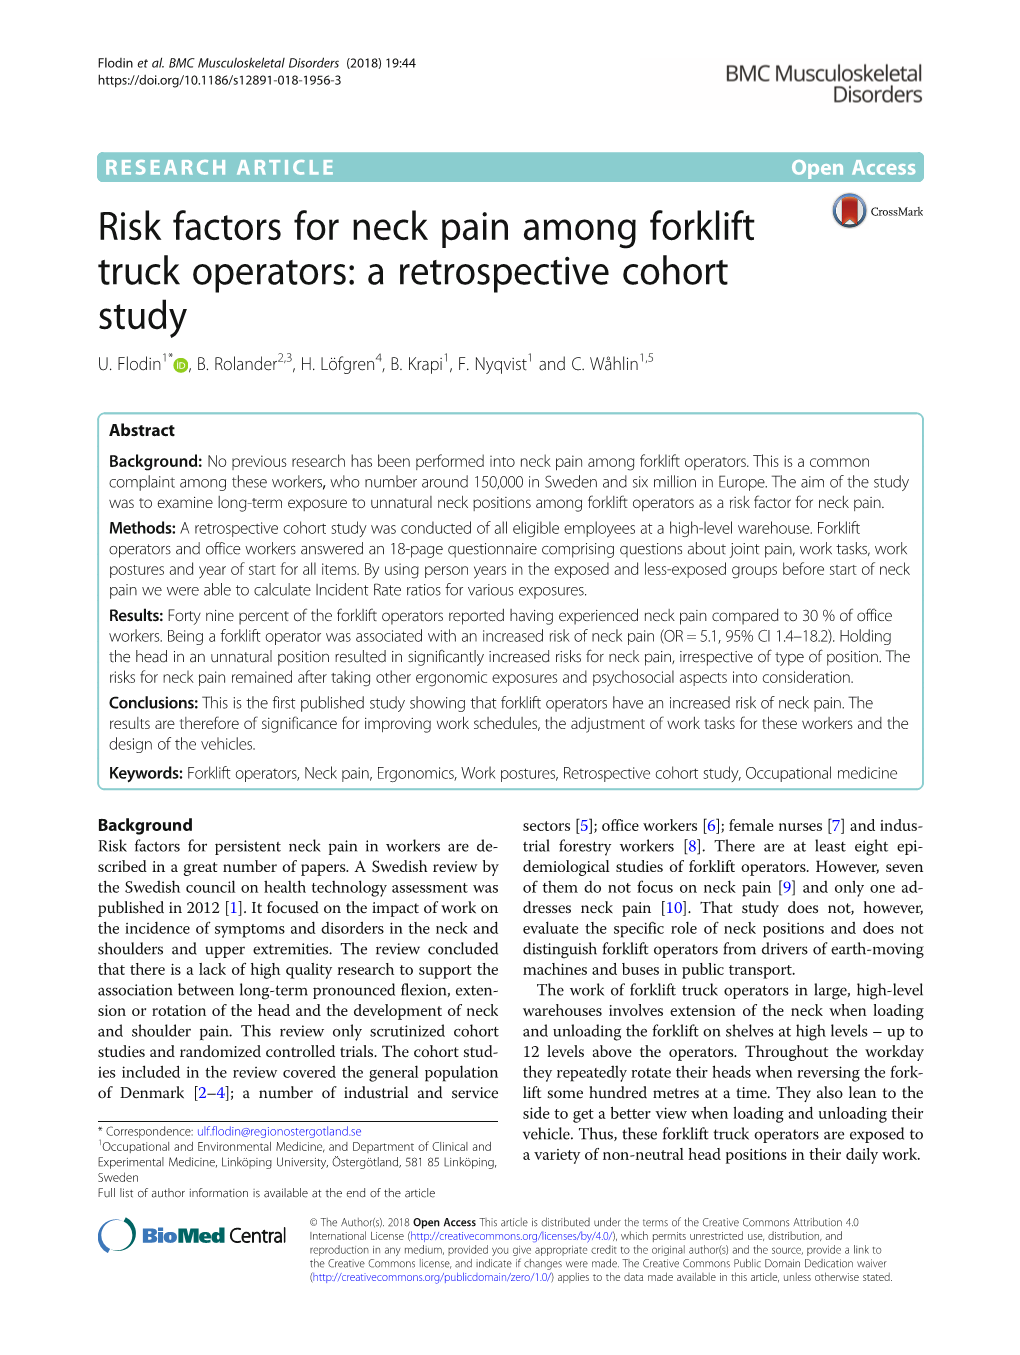 Risk Factors for Neck Pain Among Forklift Truck Operators: a Retrospective Cohort Study U